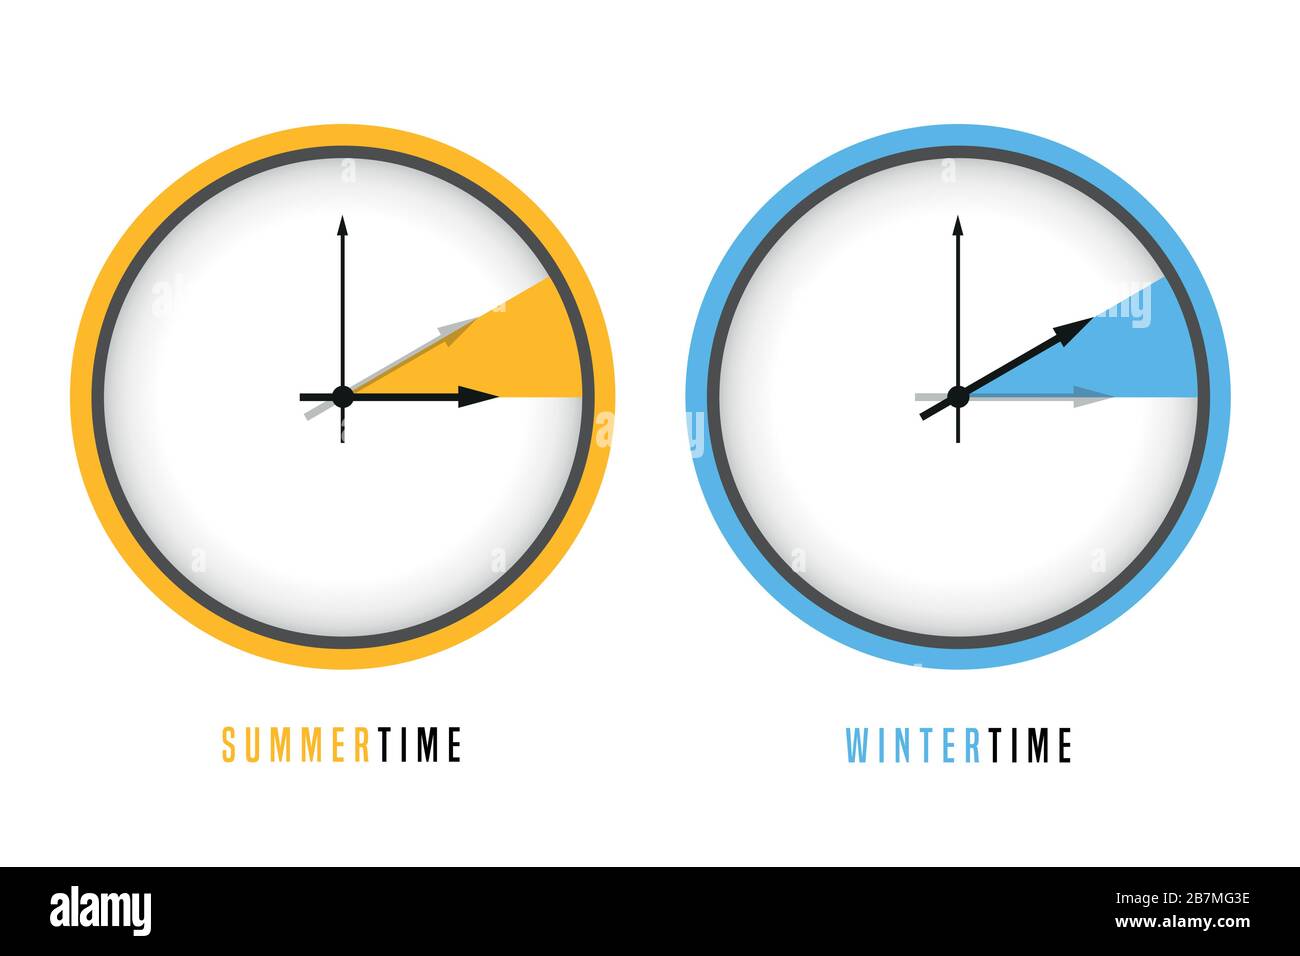 summer and winter time clock daylight saving vector illustration EPS10 Stock Vector